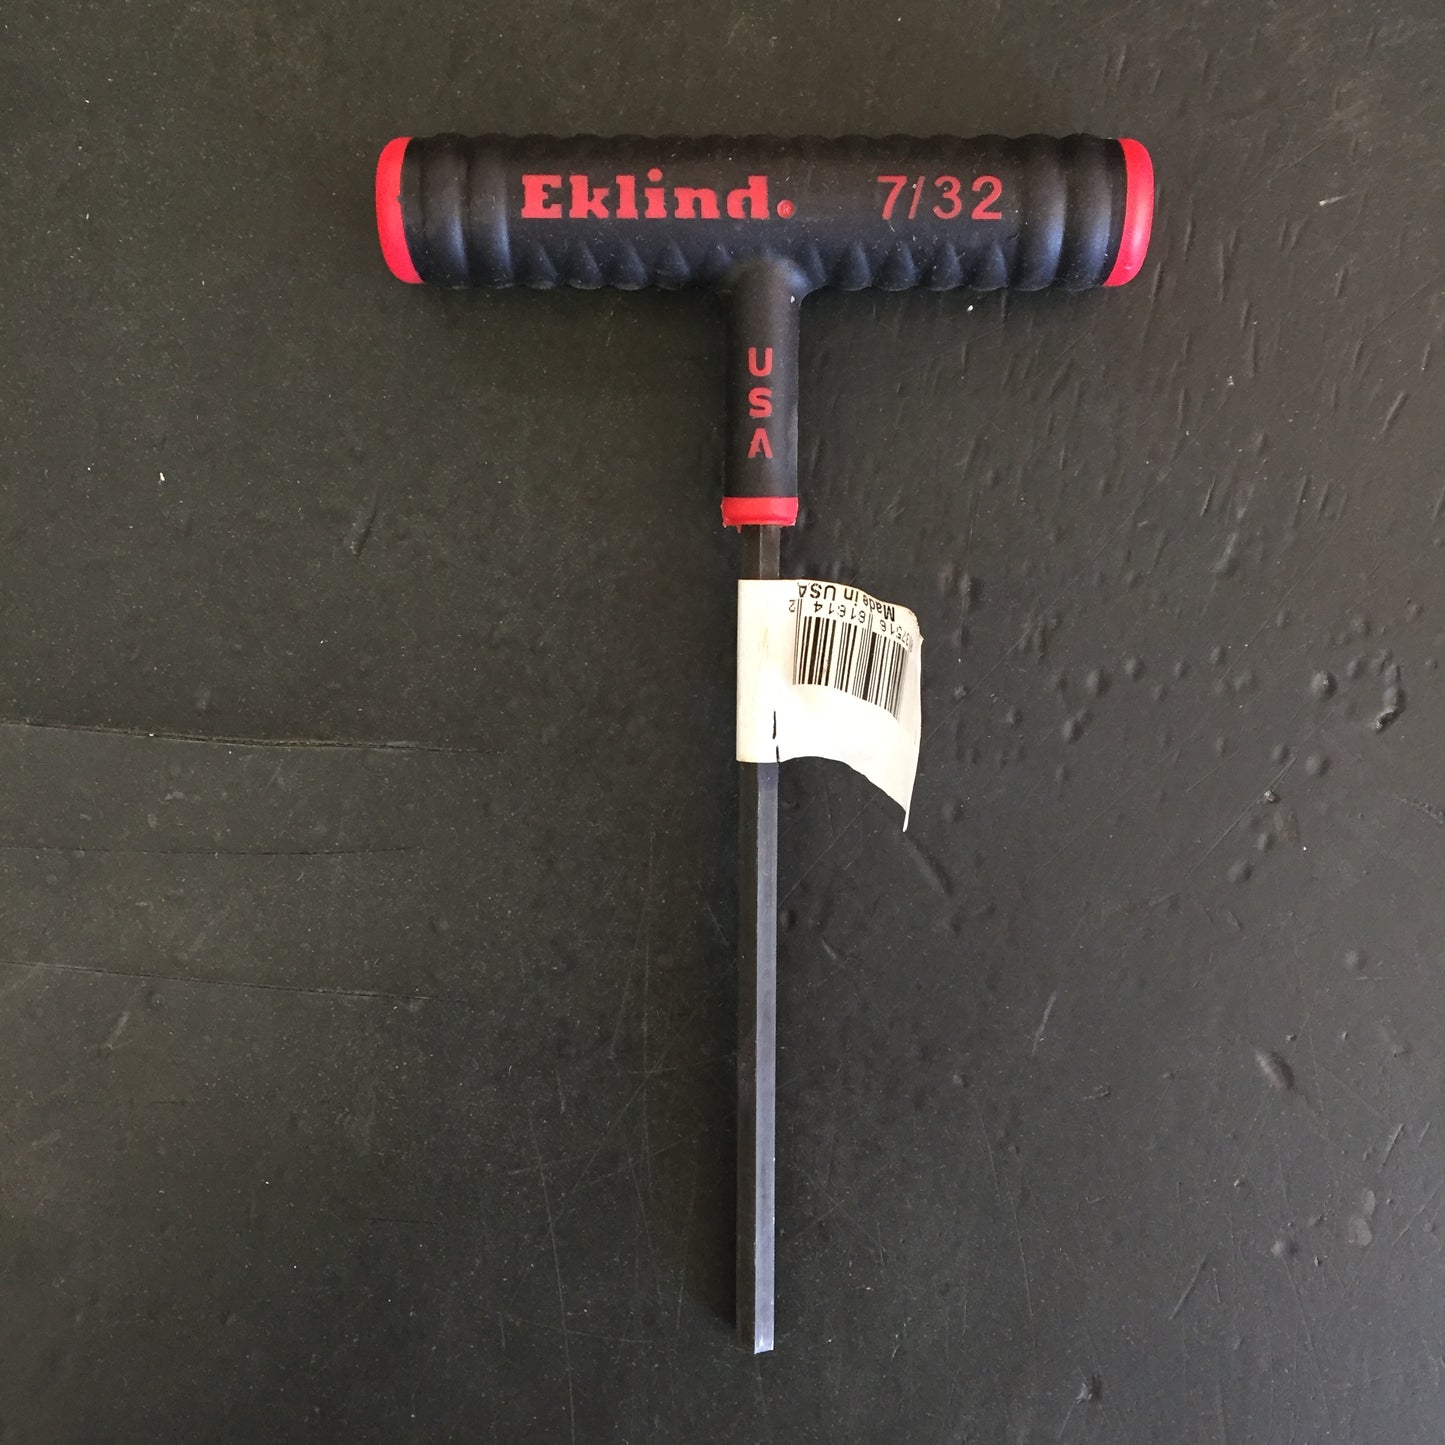 Eklind 7/32 Inch Power-T T-Handle Hex T-Key allen wrench 4 1/2" Blade Length (61614)